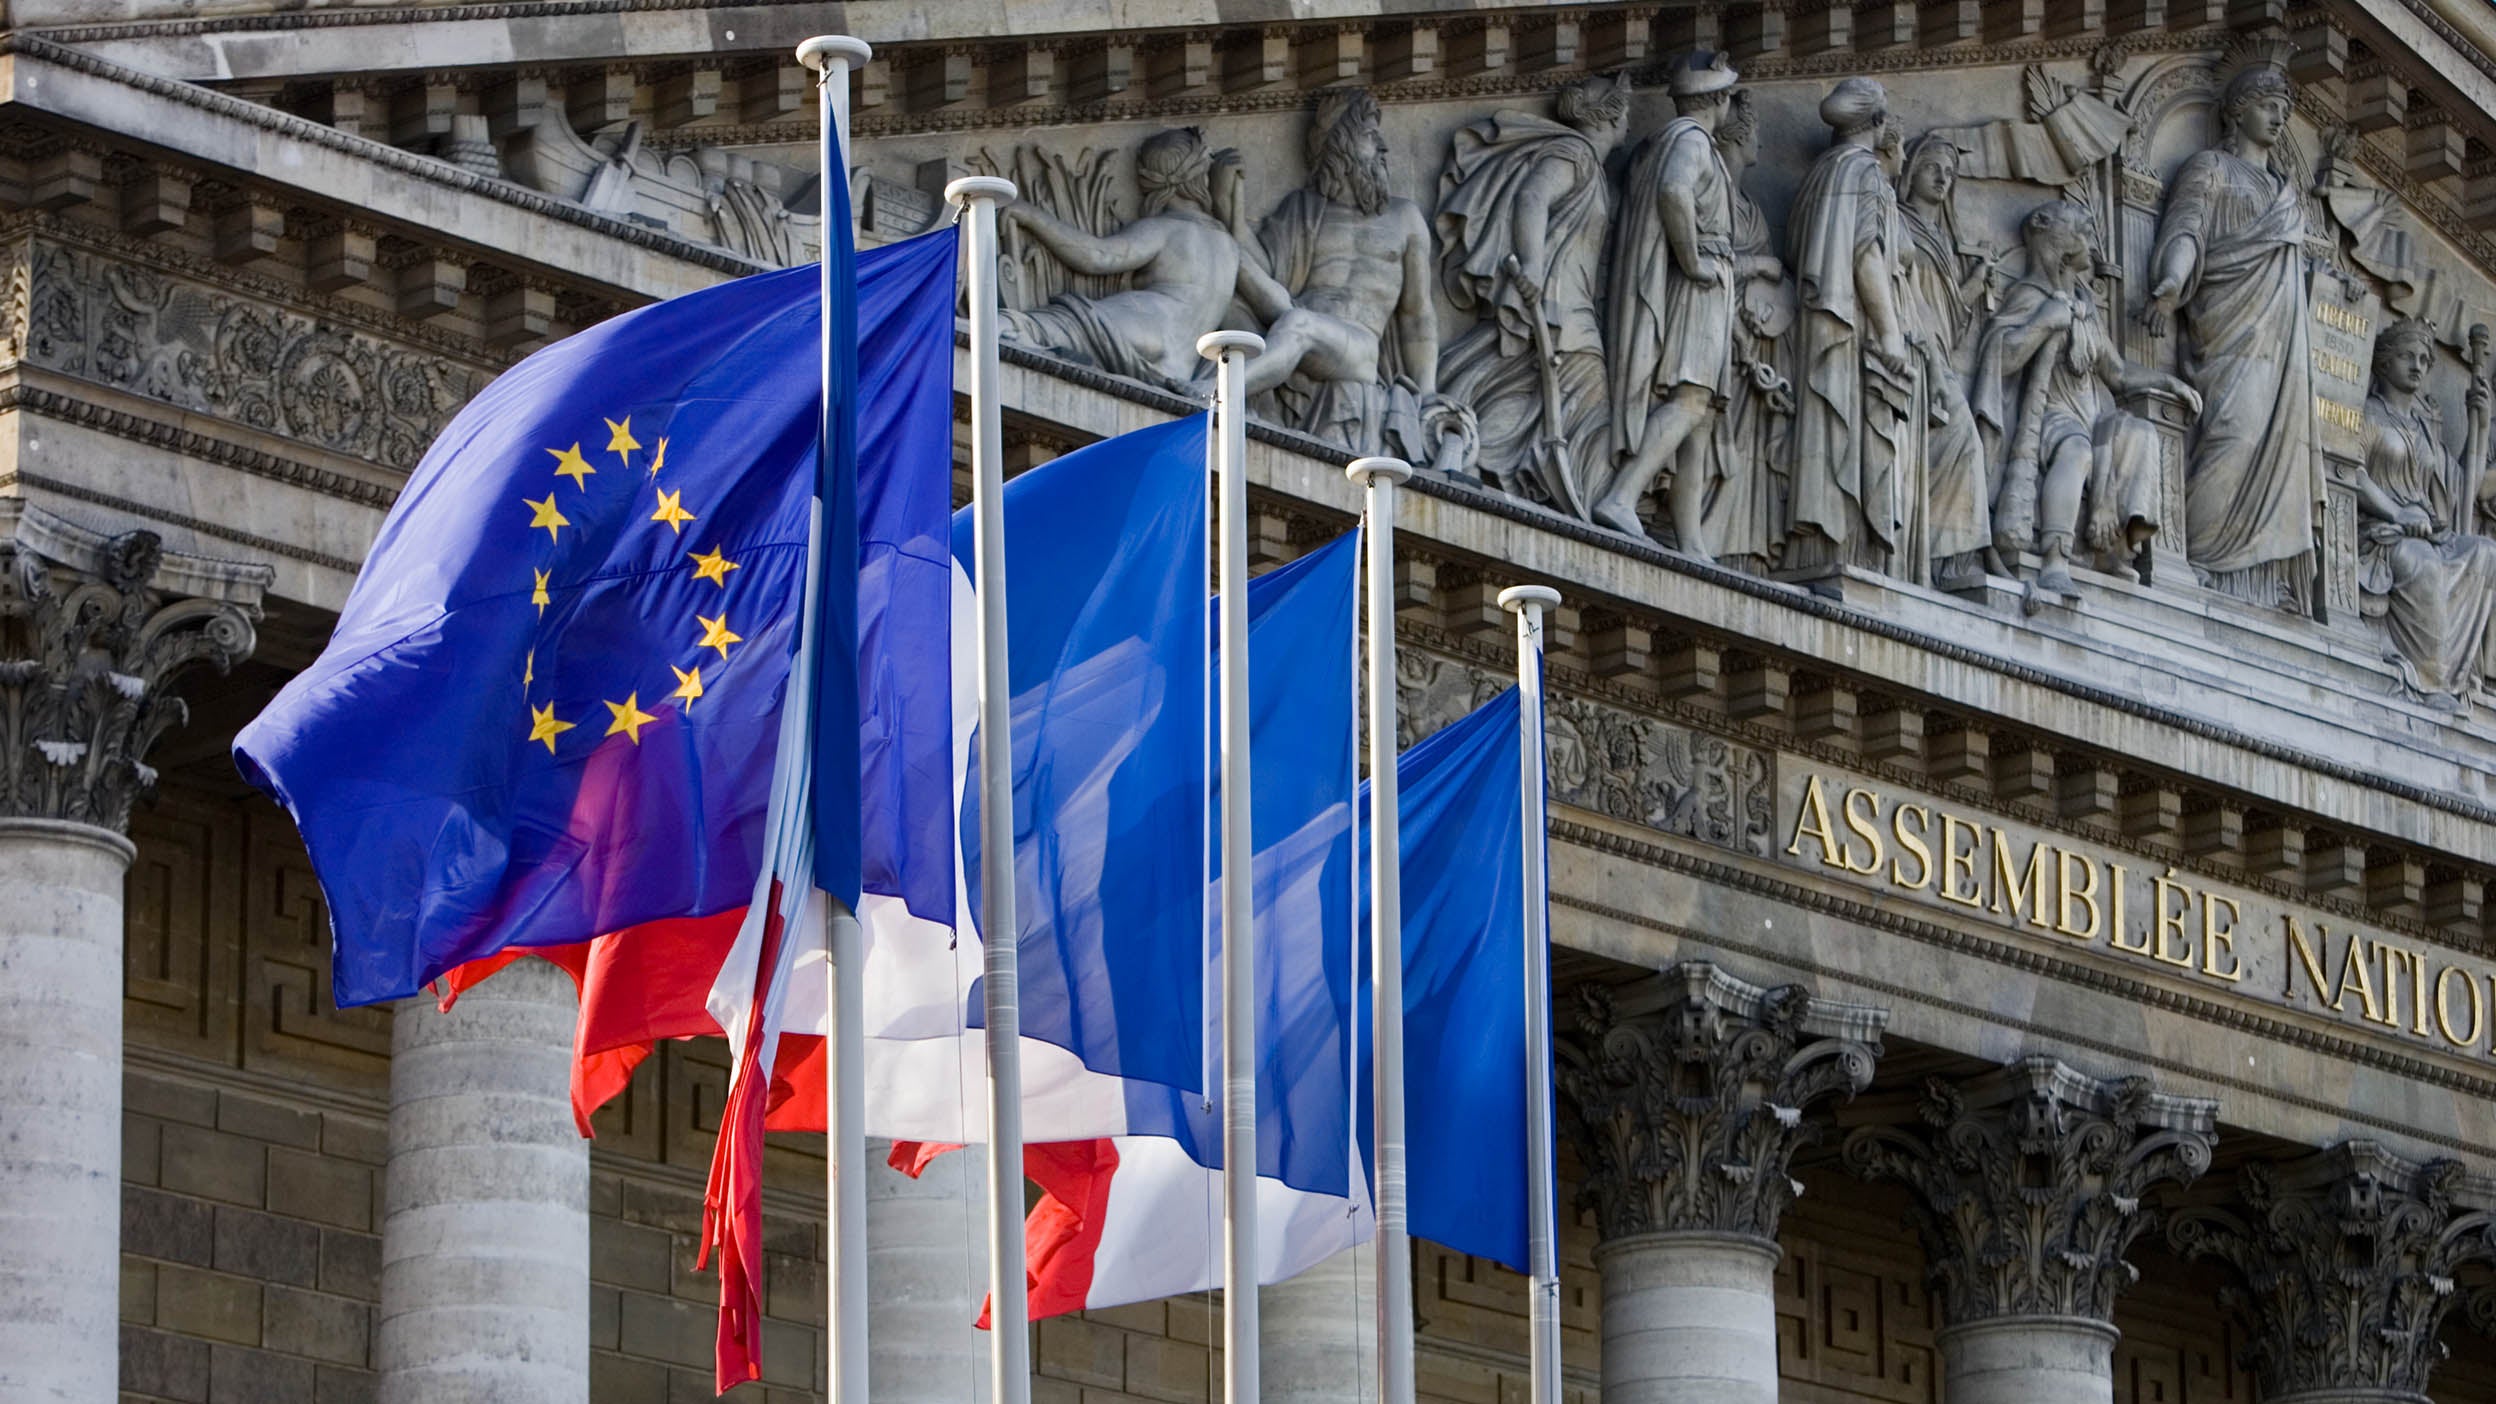 Flags fly on flagpoles outside Assemble Nationale, Palais Bourbon, Central Paris, France